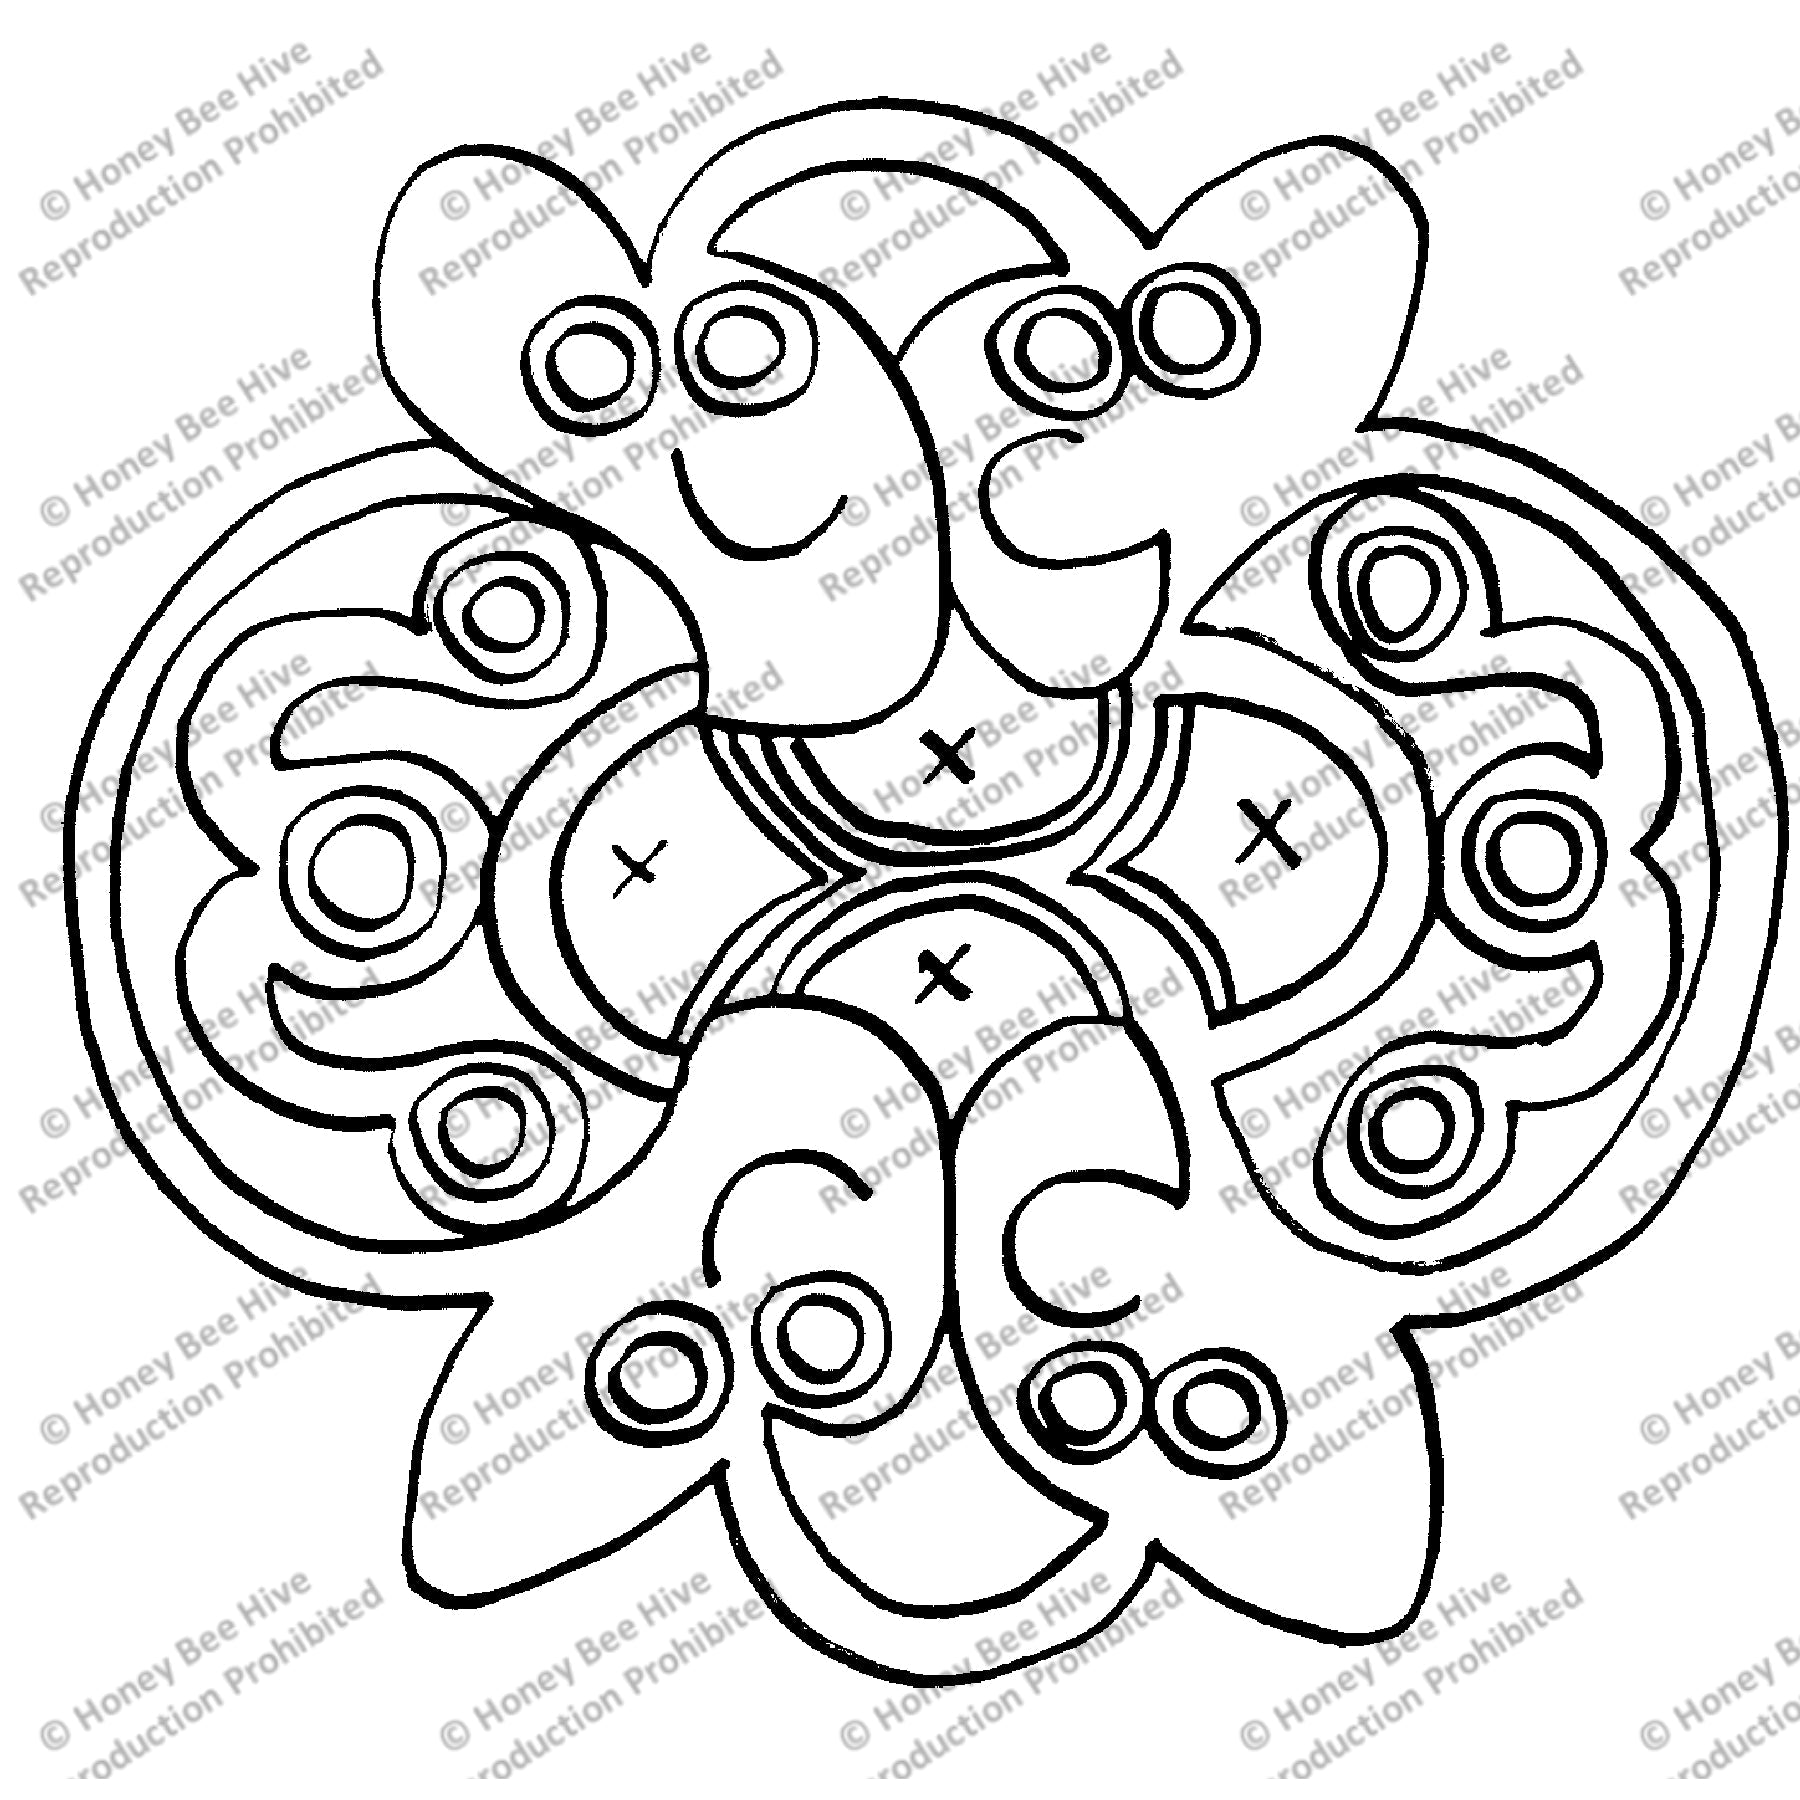 Celtic Horse Ornaments - Ornament #5, rug hooking pattern